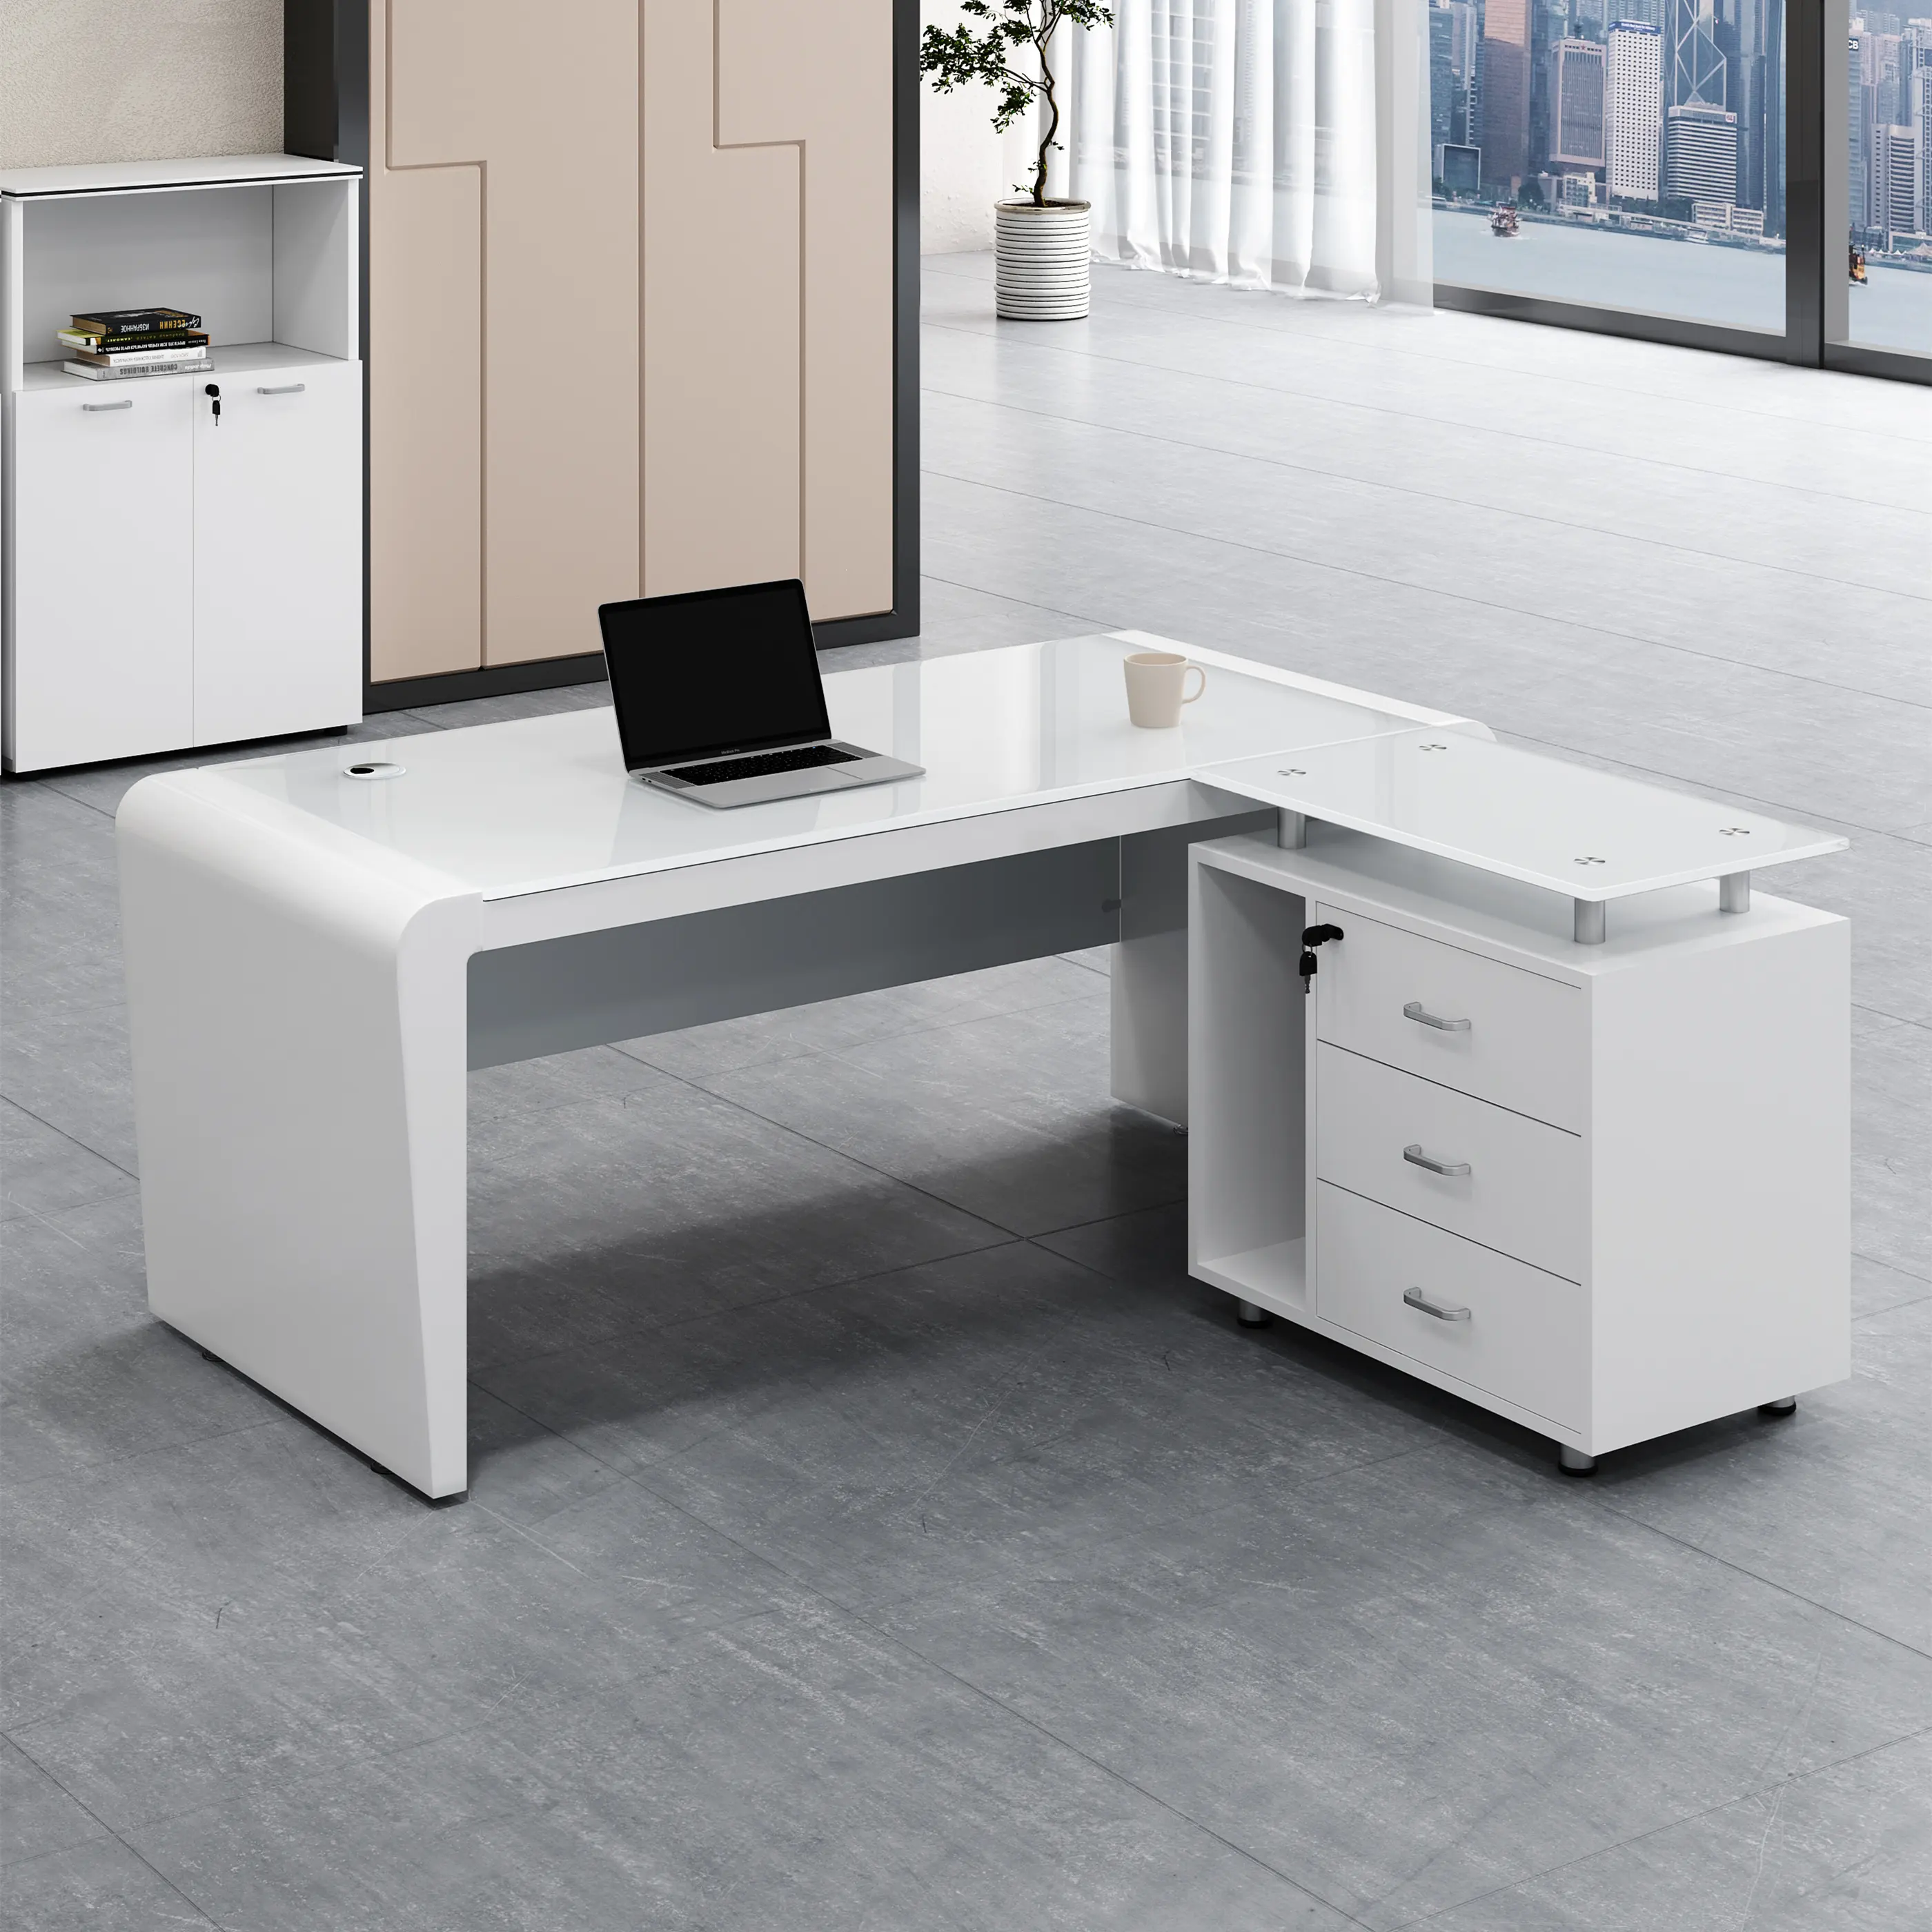 Mobilier de bureau moderne de luxe, bureau de bureau avec Table à tiroirs